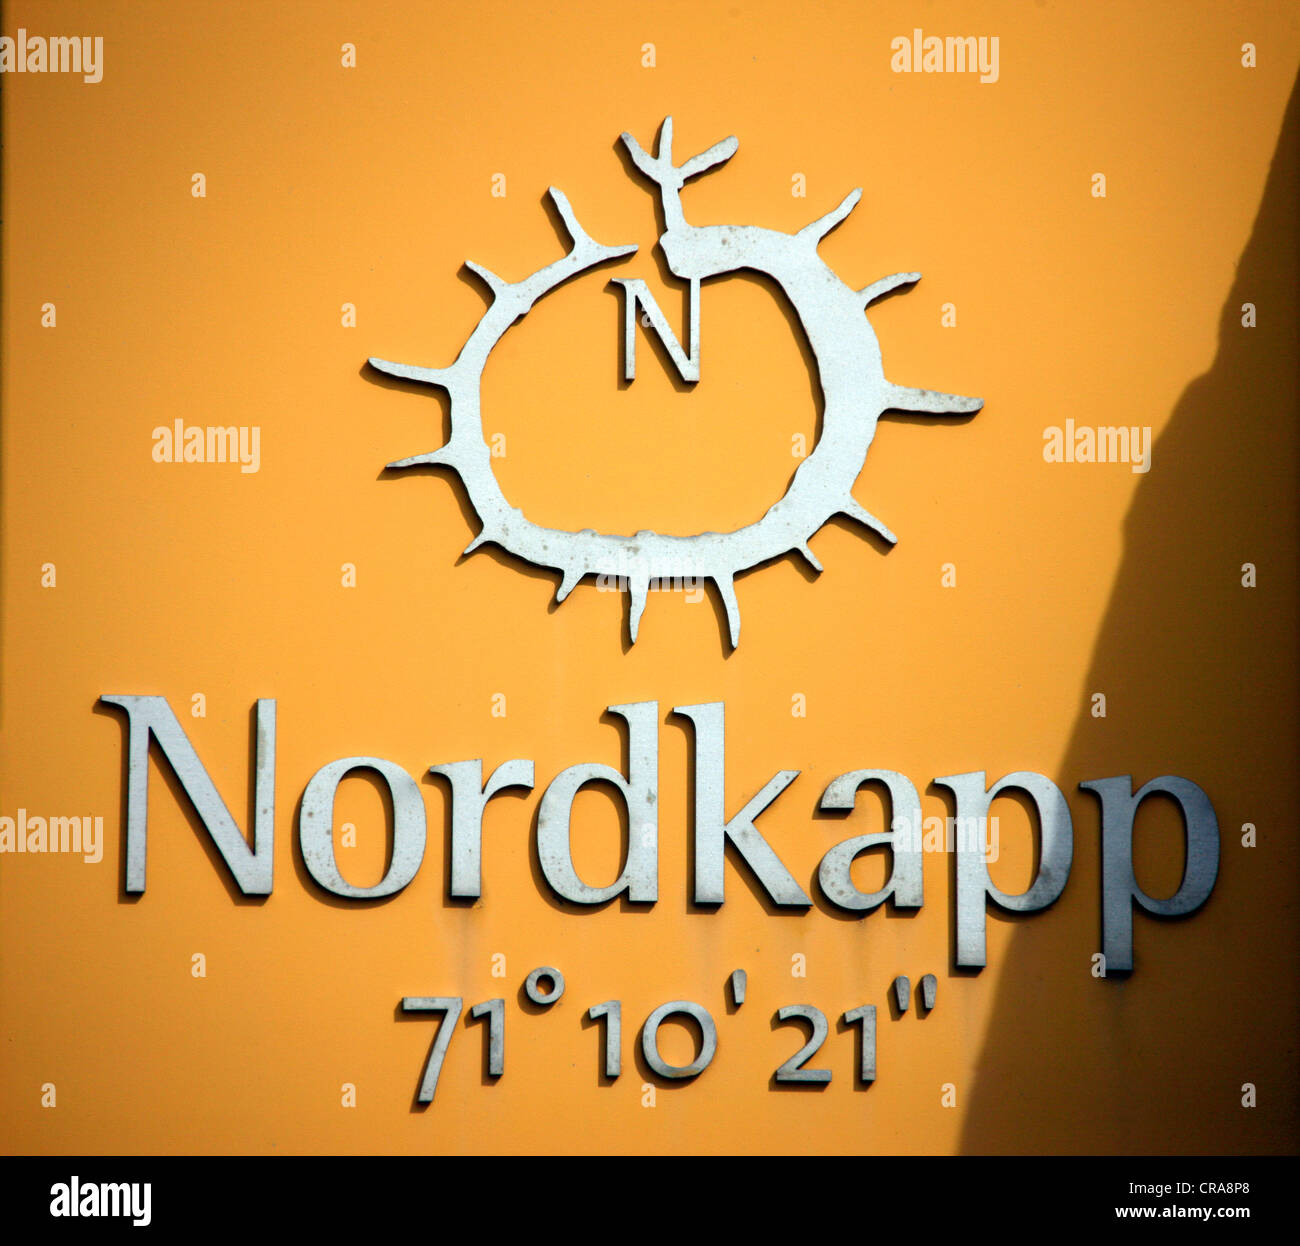 71° 10' 21'', coordinates of the North Cape, Norway, Scandinavia, Europe Stock Photo